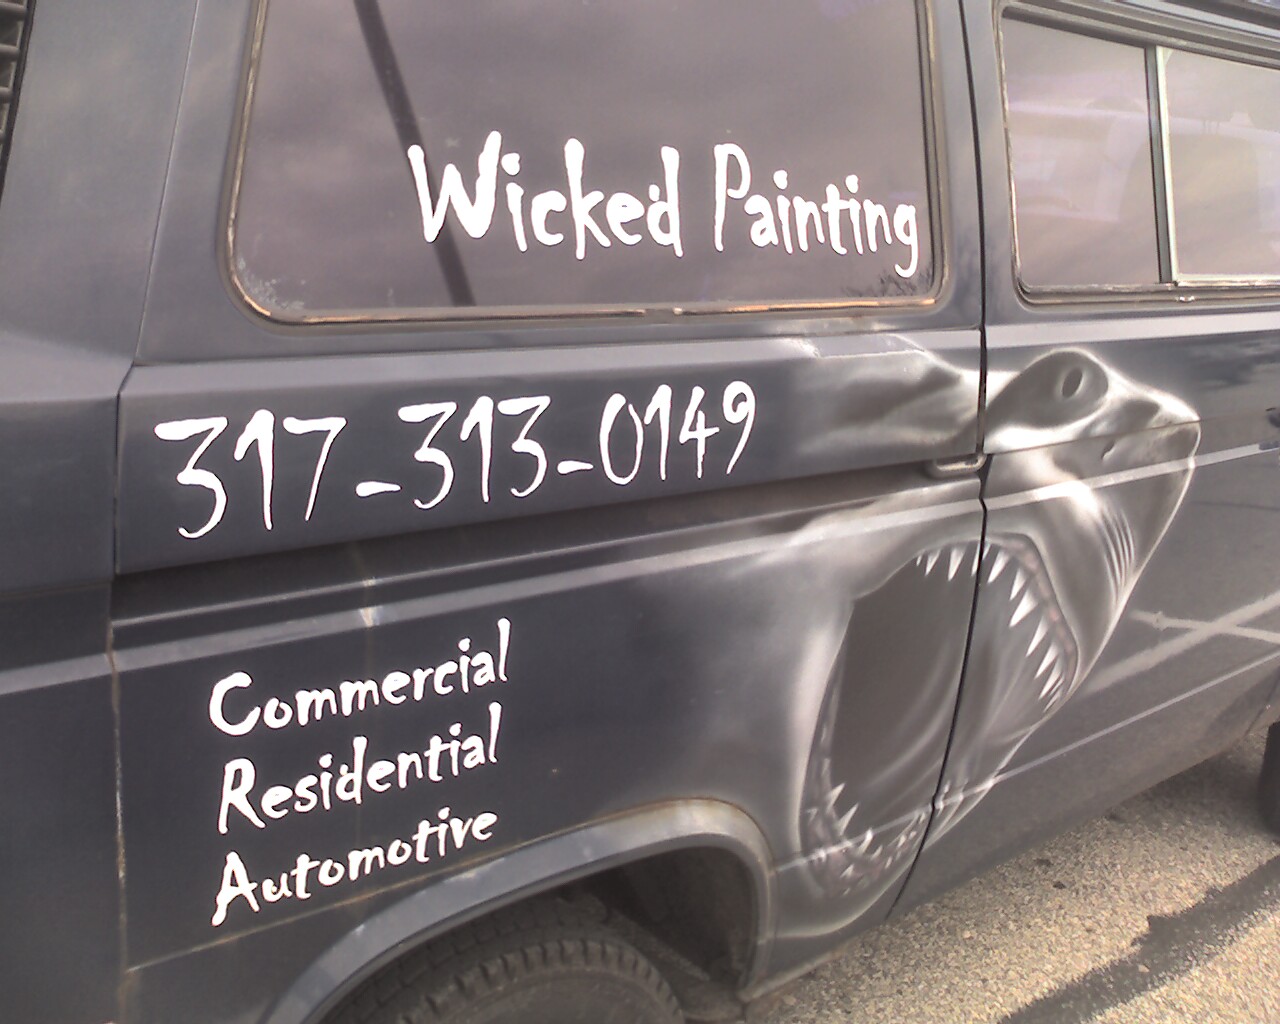 Local Painter's Custom Paint Job on his Van